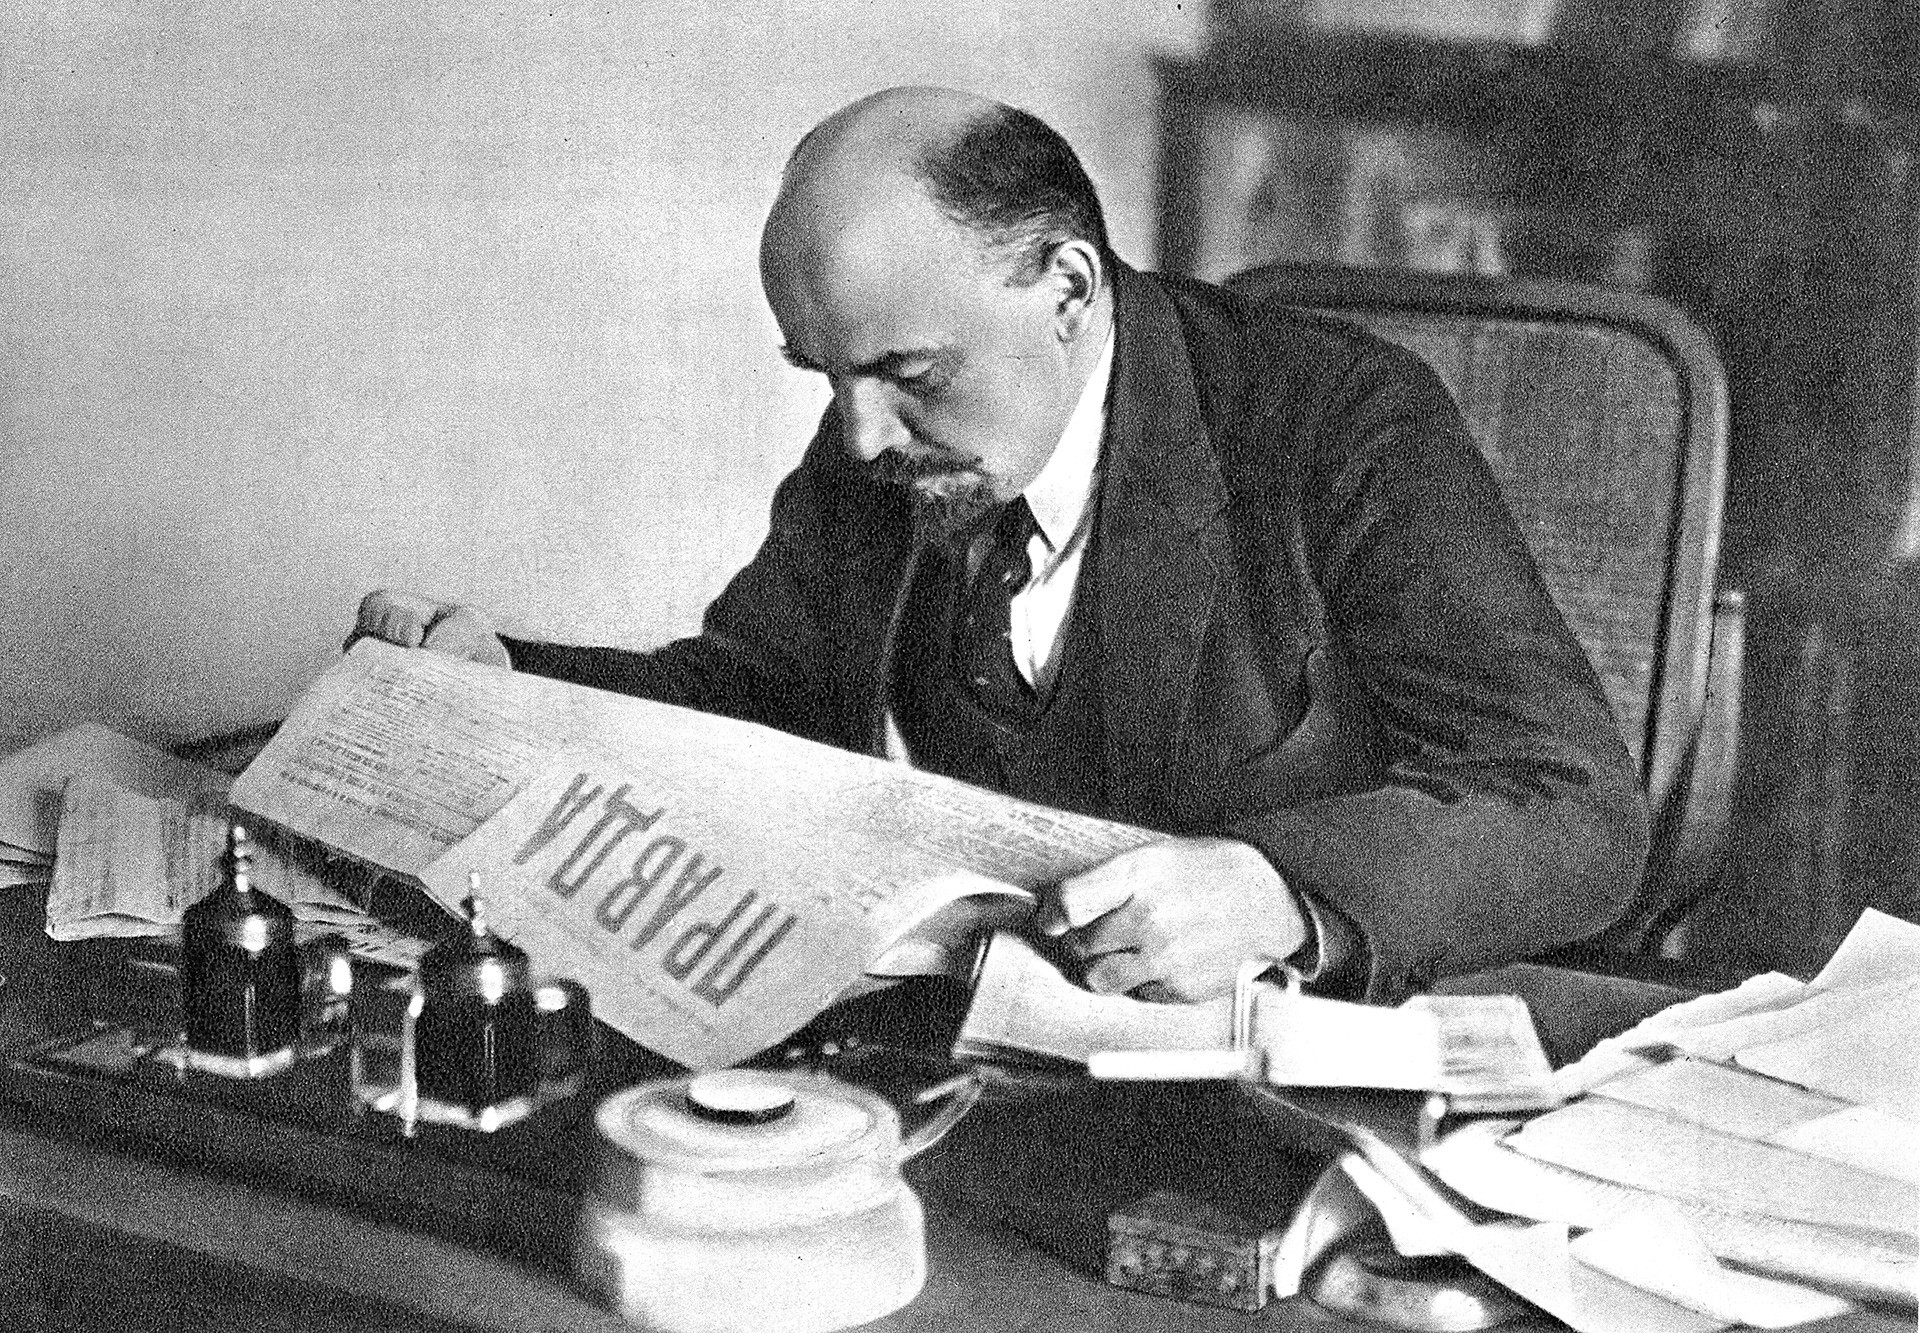 Lenin lee el diario ‘Pravda’.